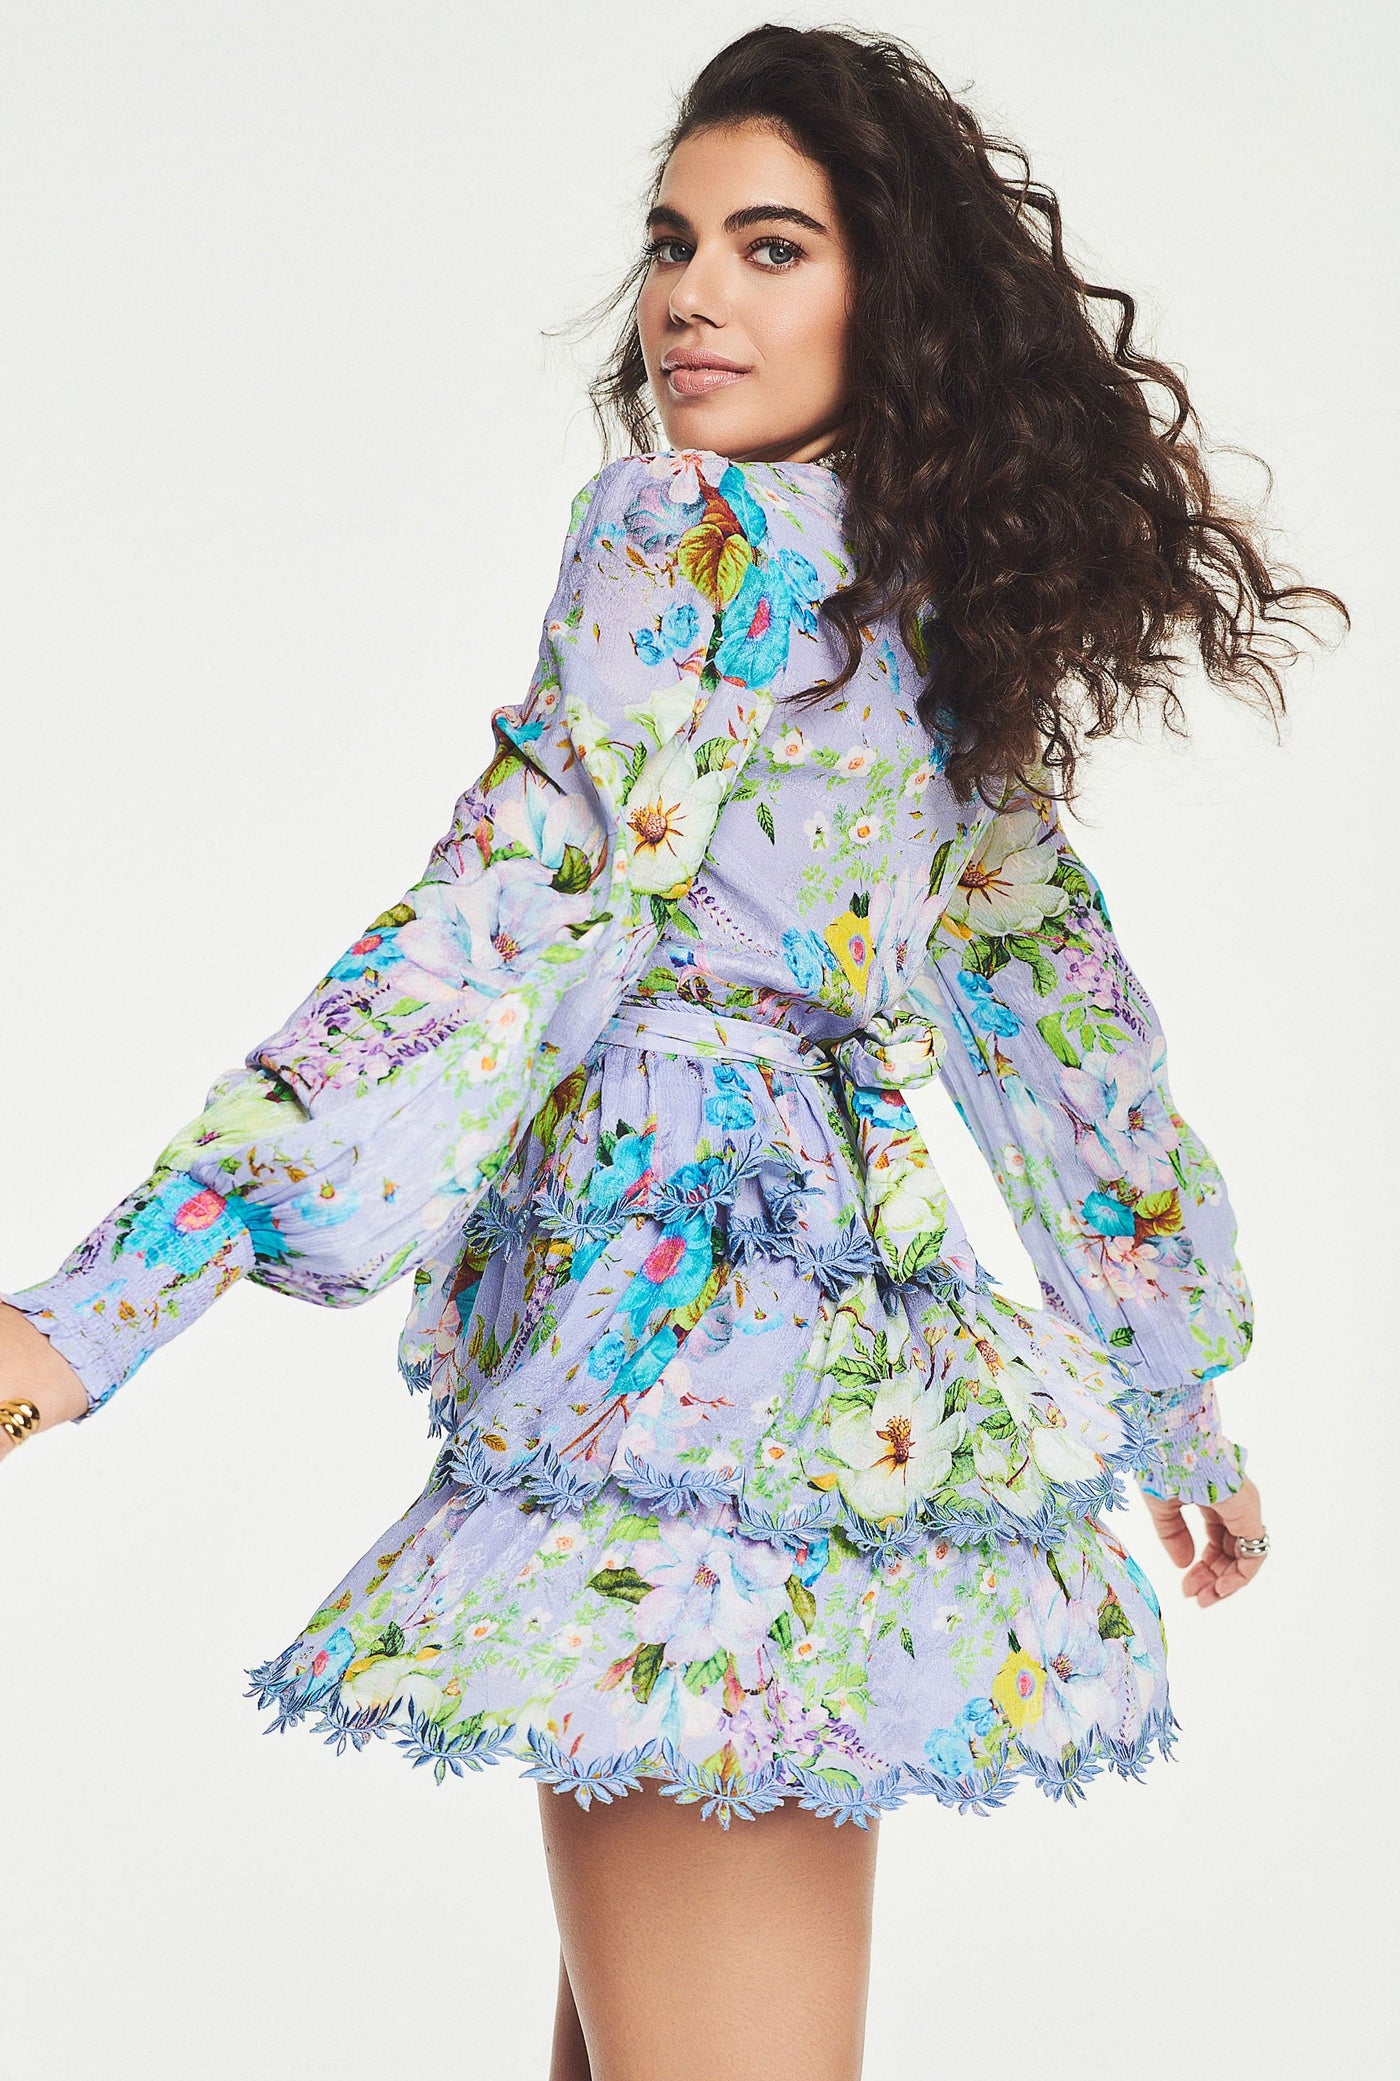 Laya Floral Short Dress For Women Hemant & Nandita